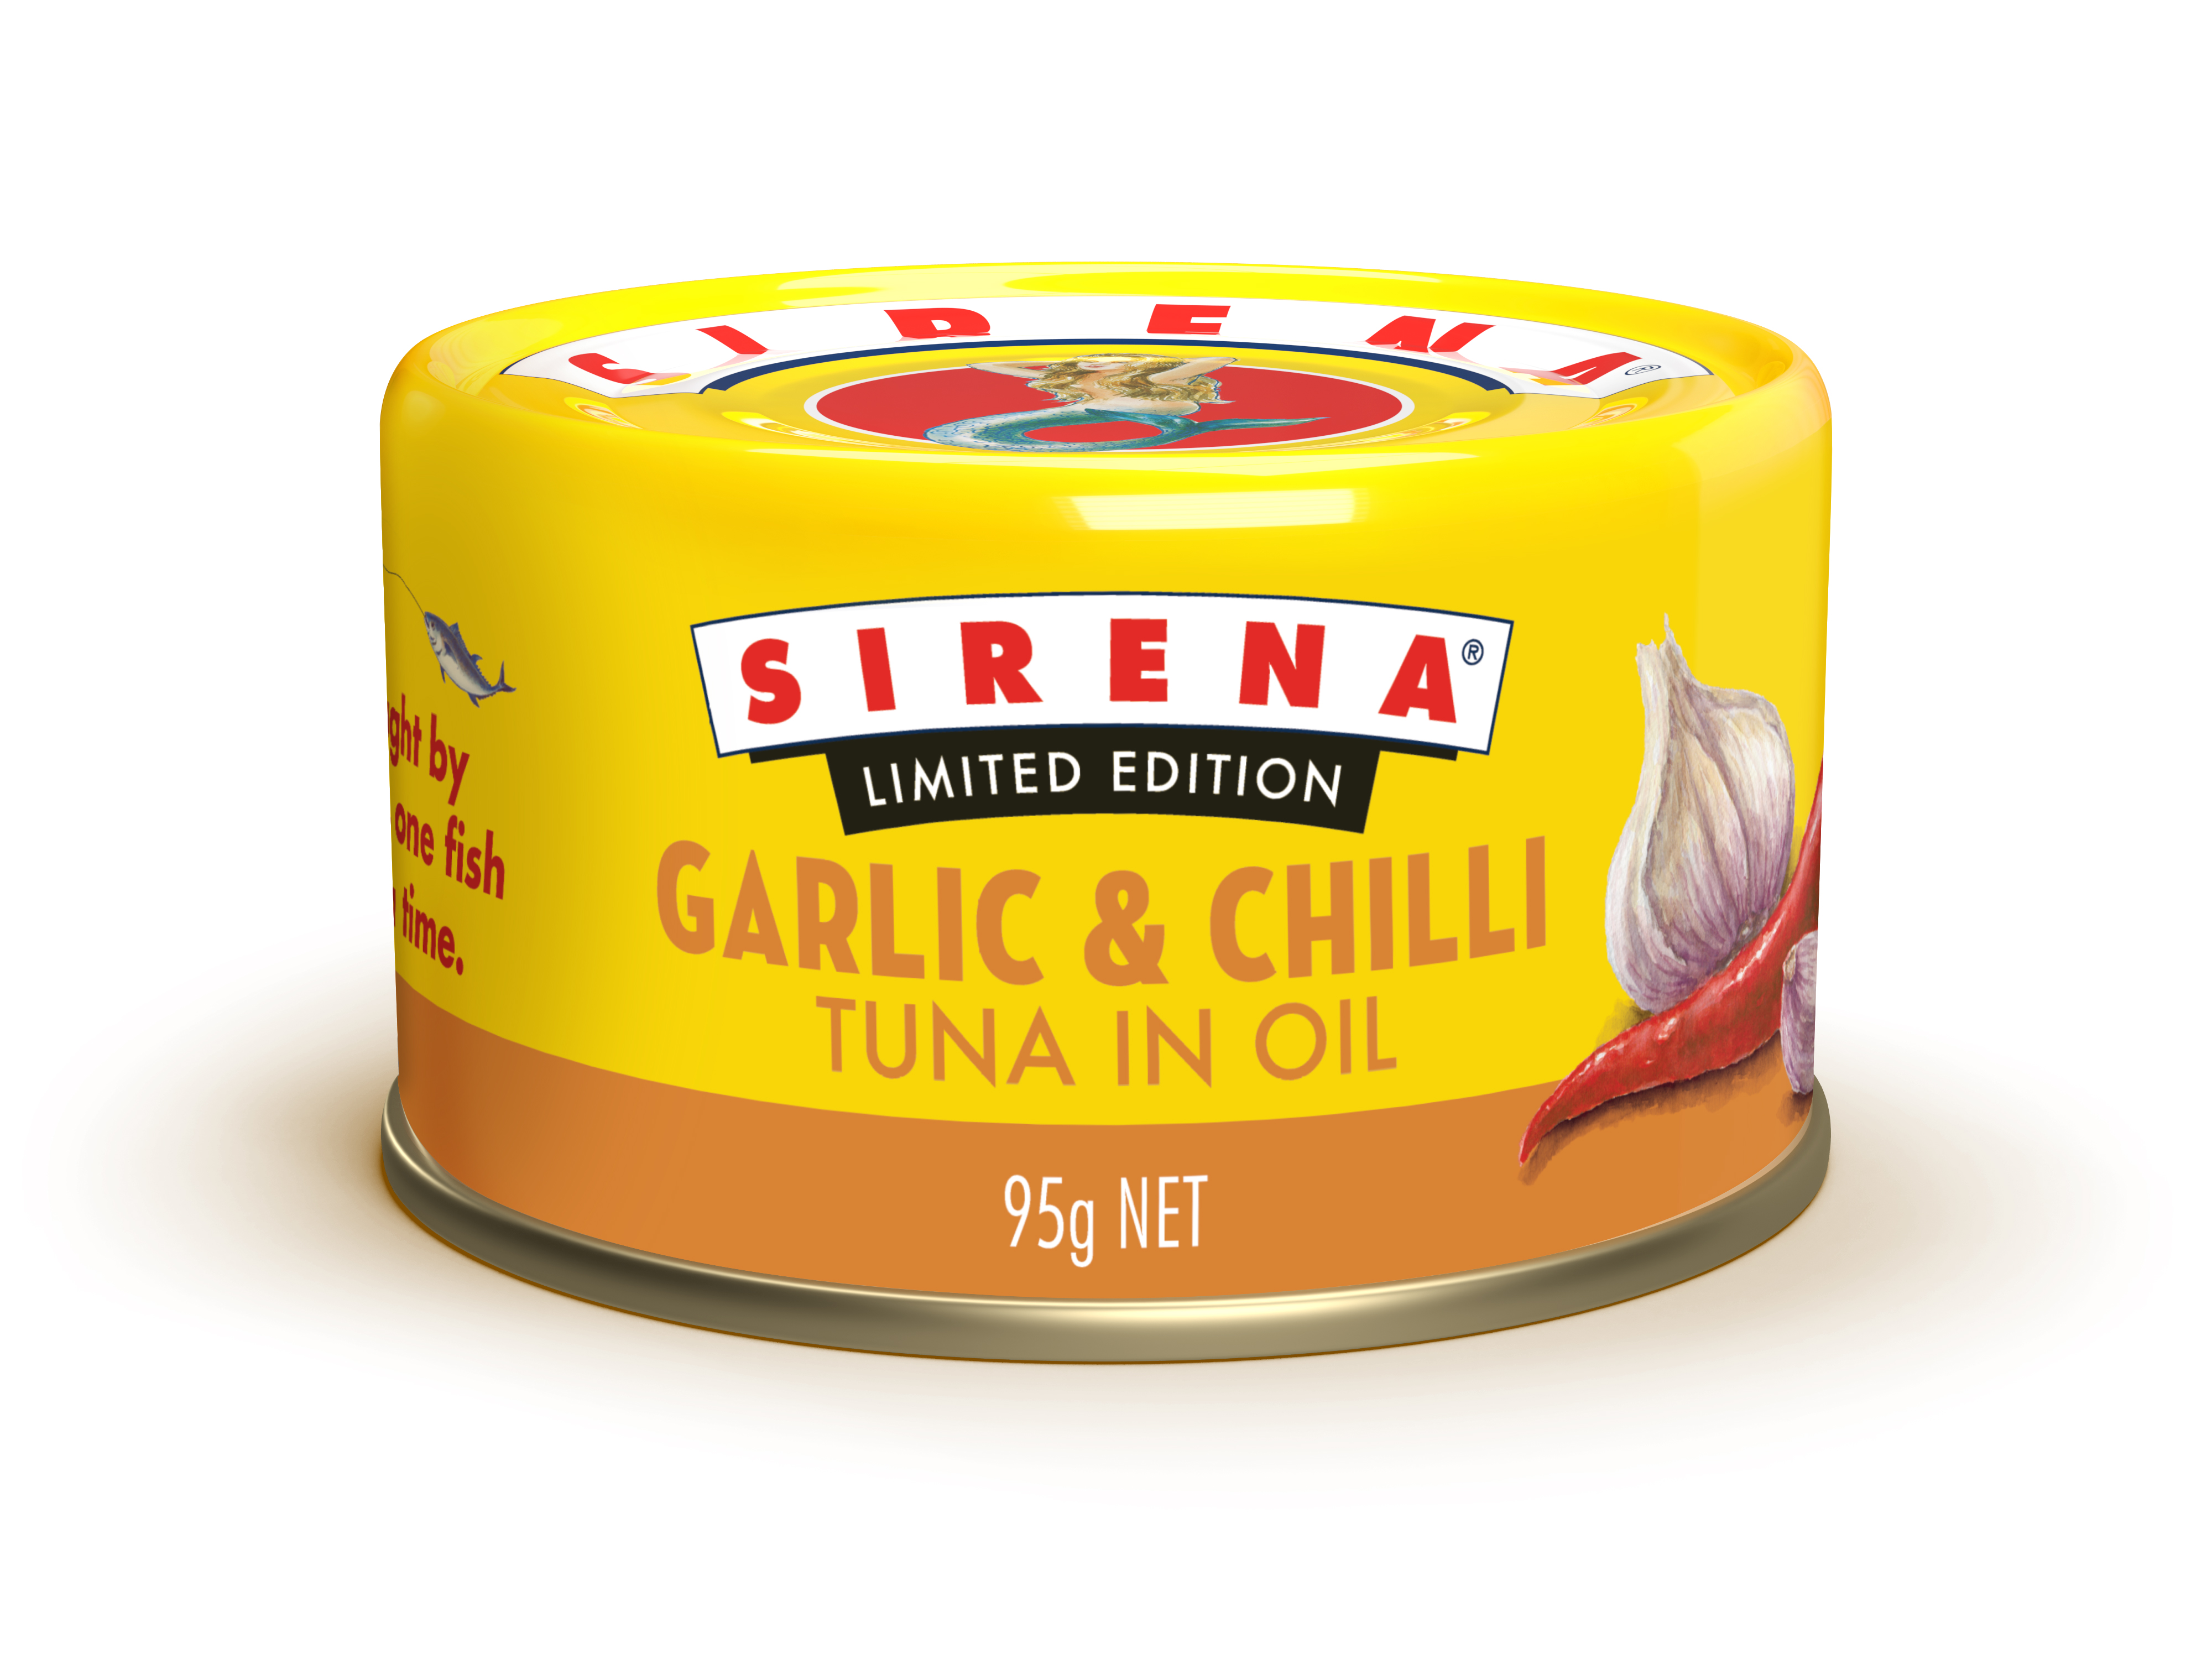 Sirena garlic and chilli